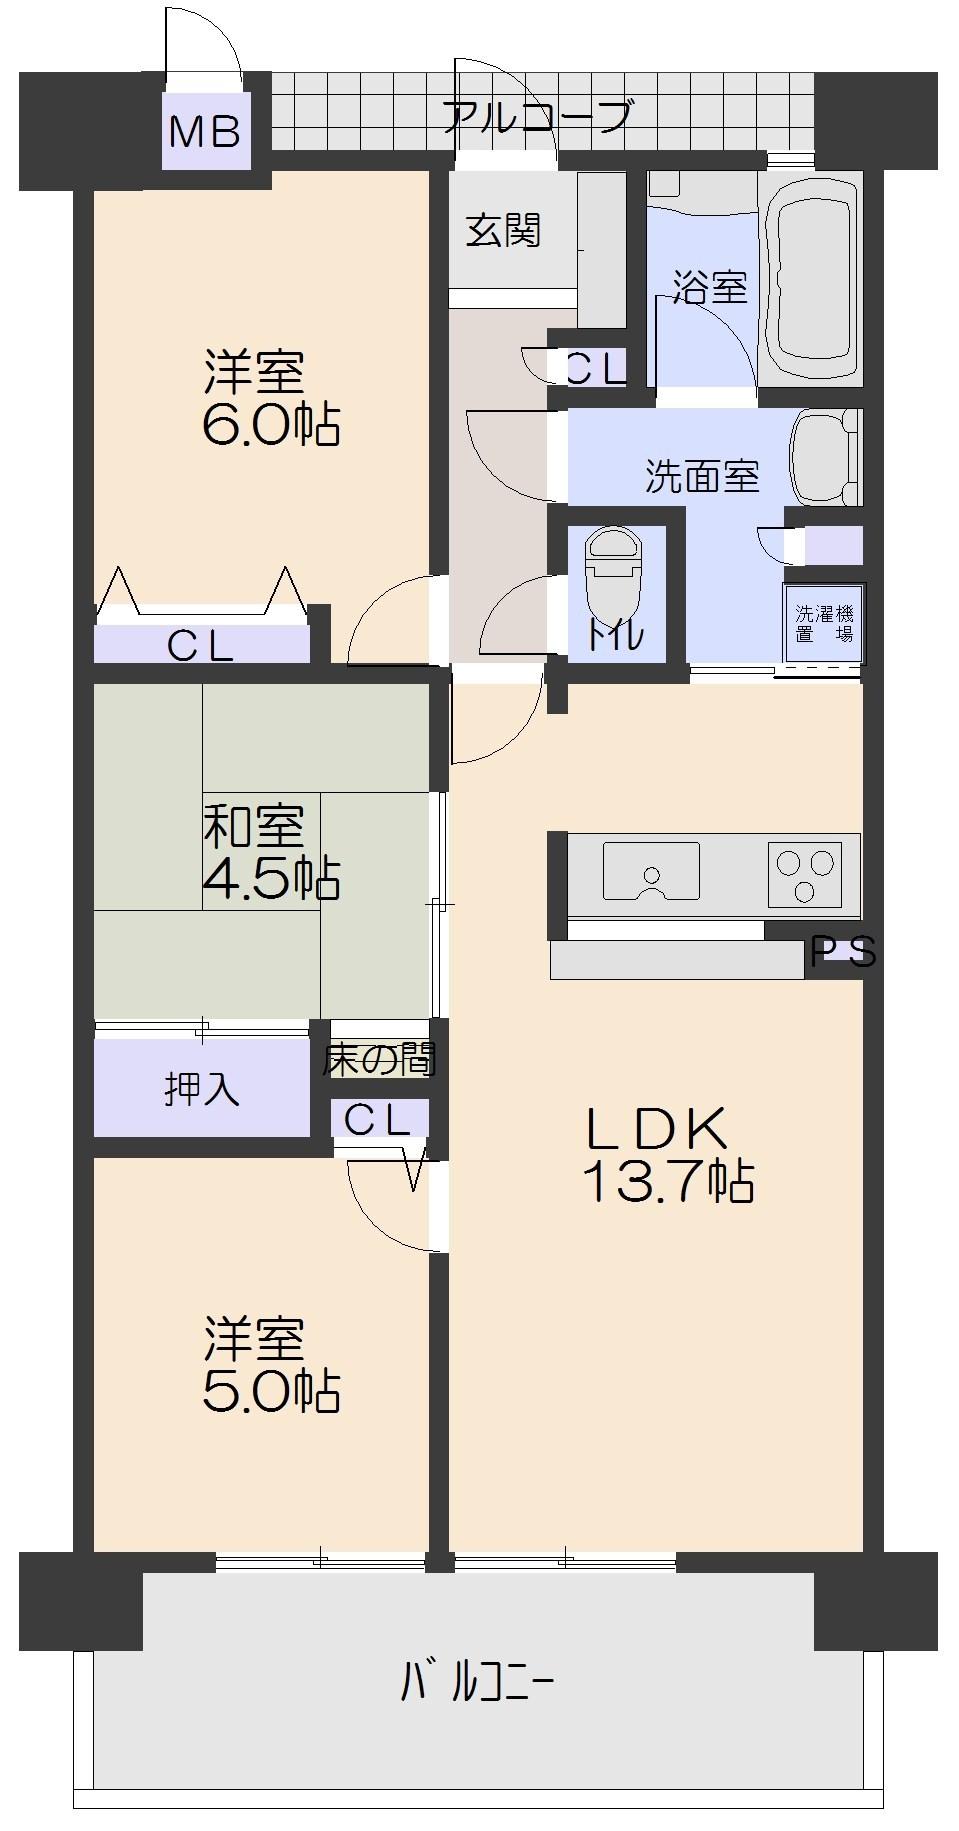 Floor plan. 3LDK, Price 20.8 million yen, Footprint 65 sq m , Balcony area 11.59 sq m